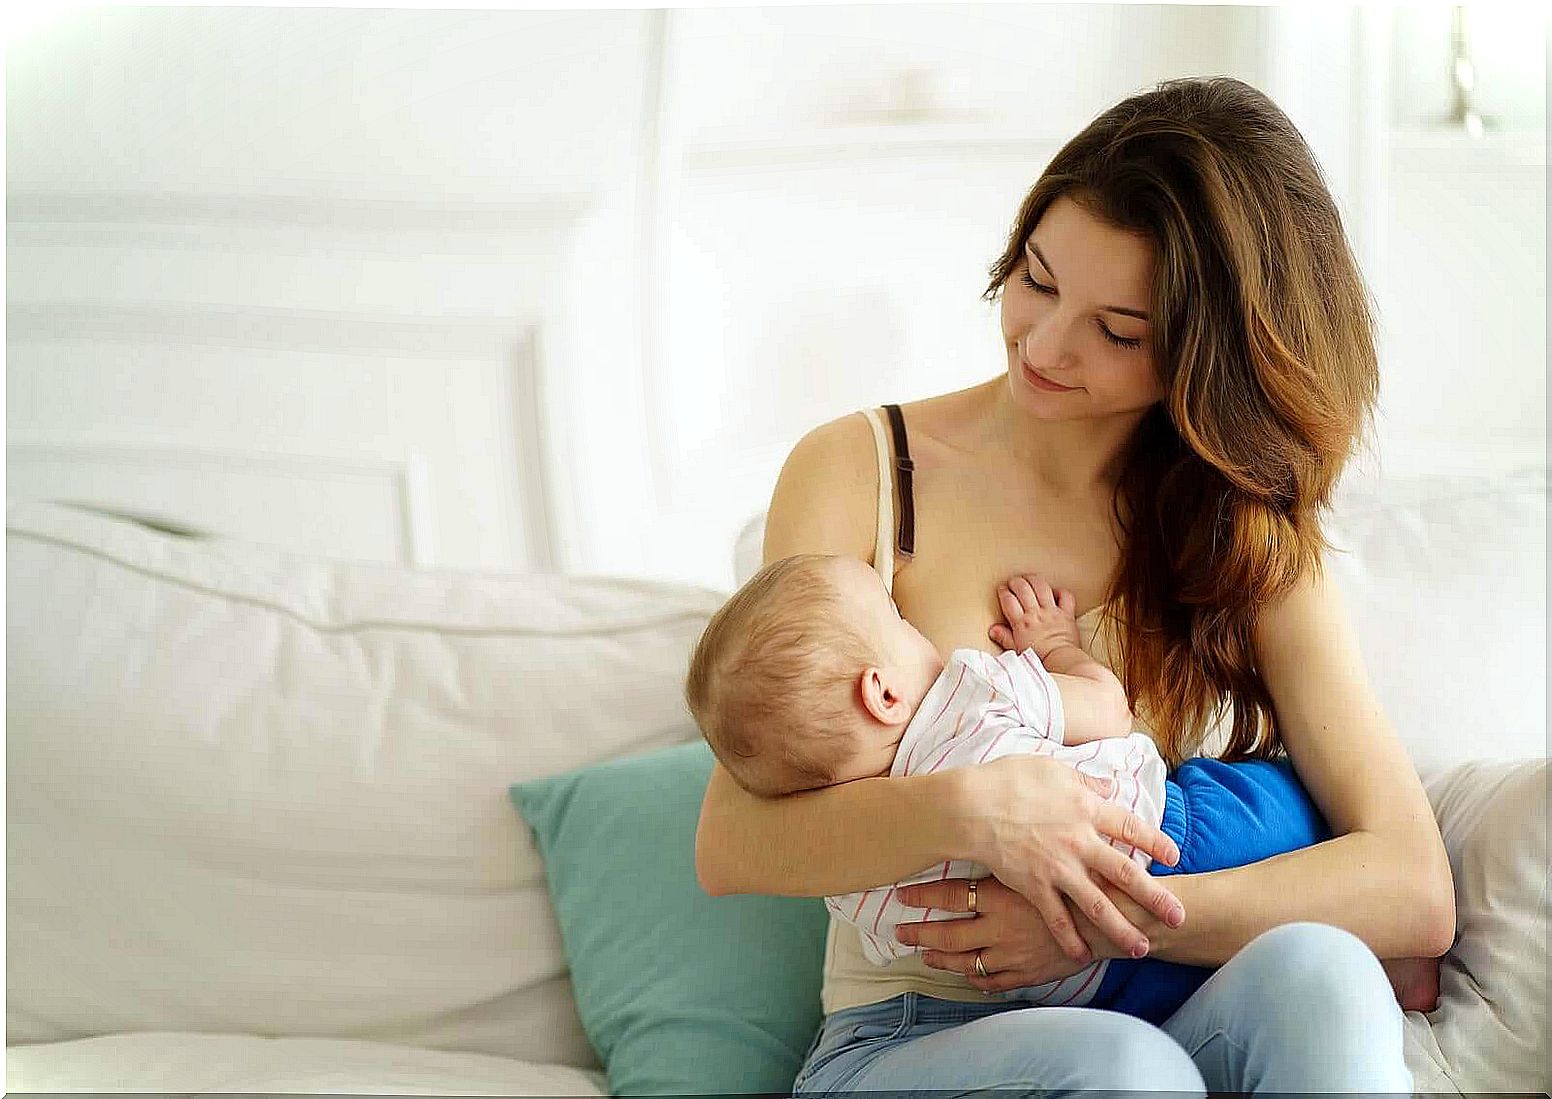 newborn baby reflexes: babies breastfeed